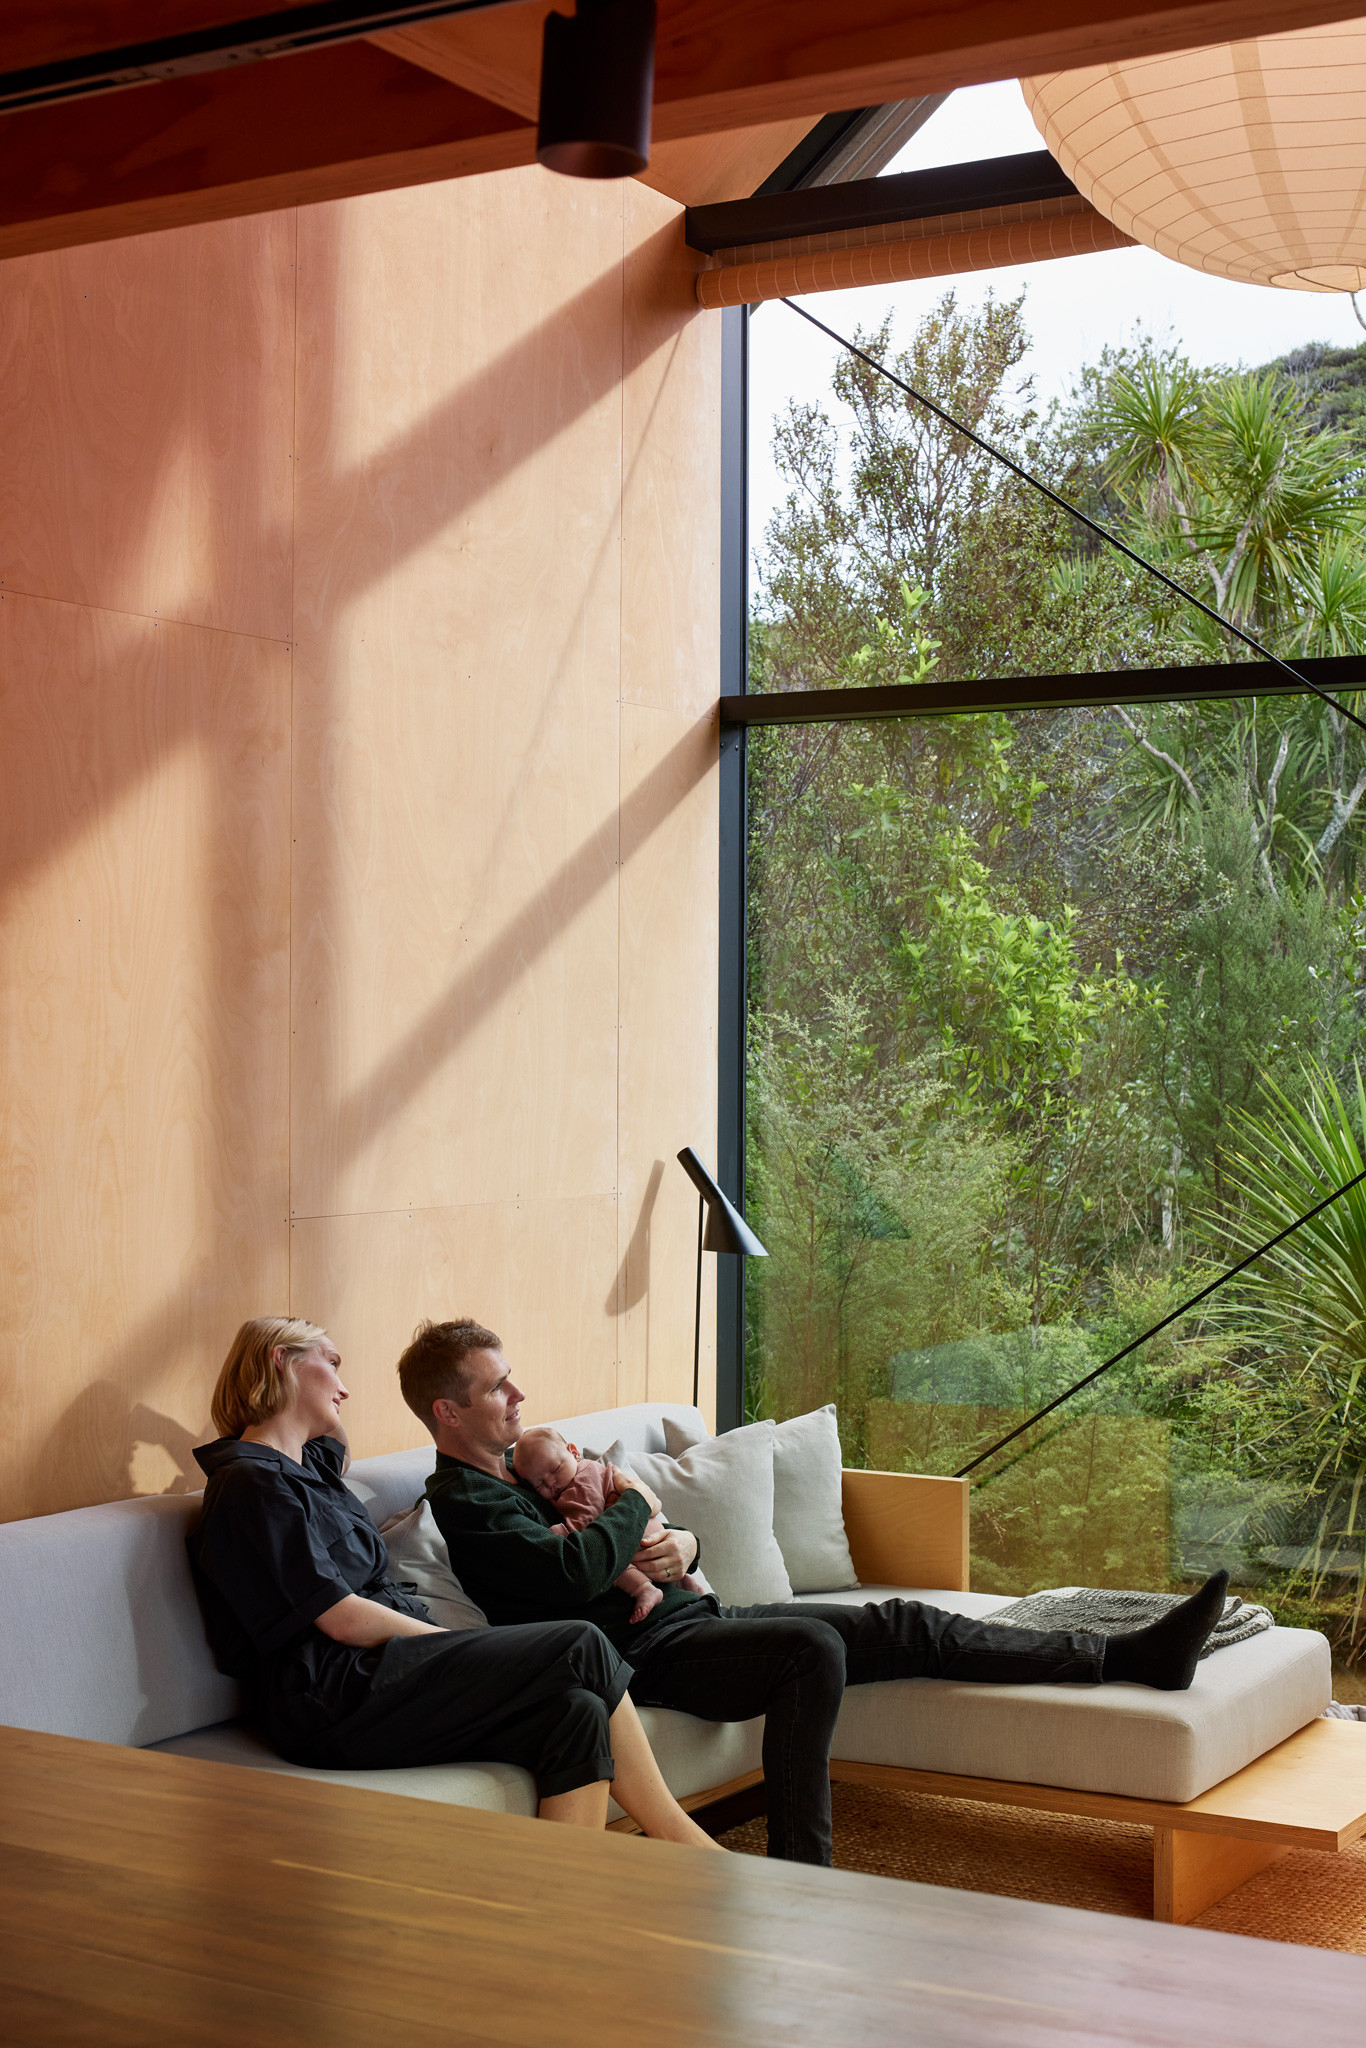 Naturalistic design in a home interior with a seamless glass corner window showcasing a bush vista